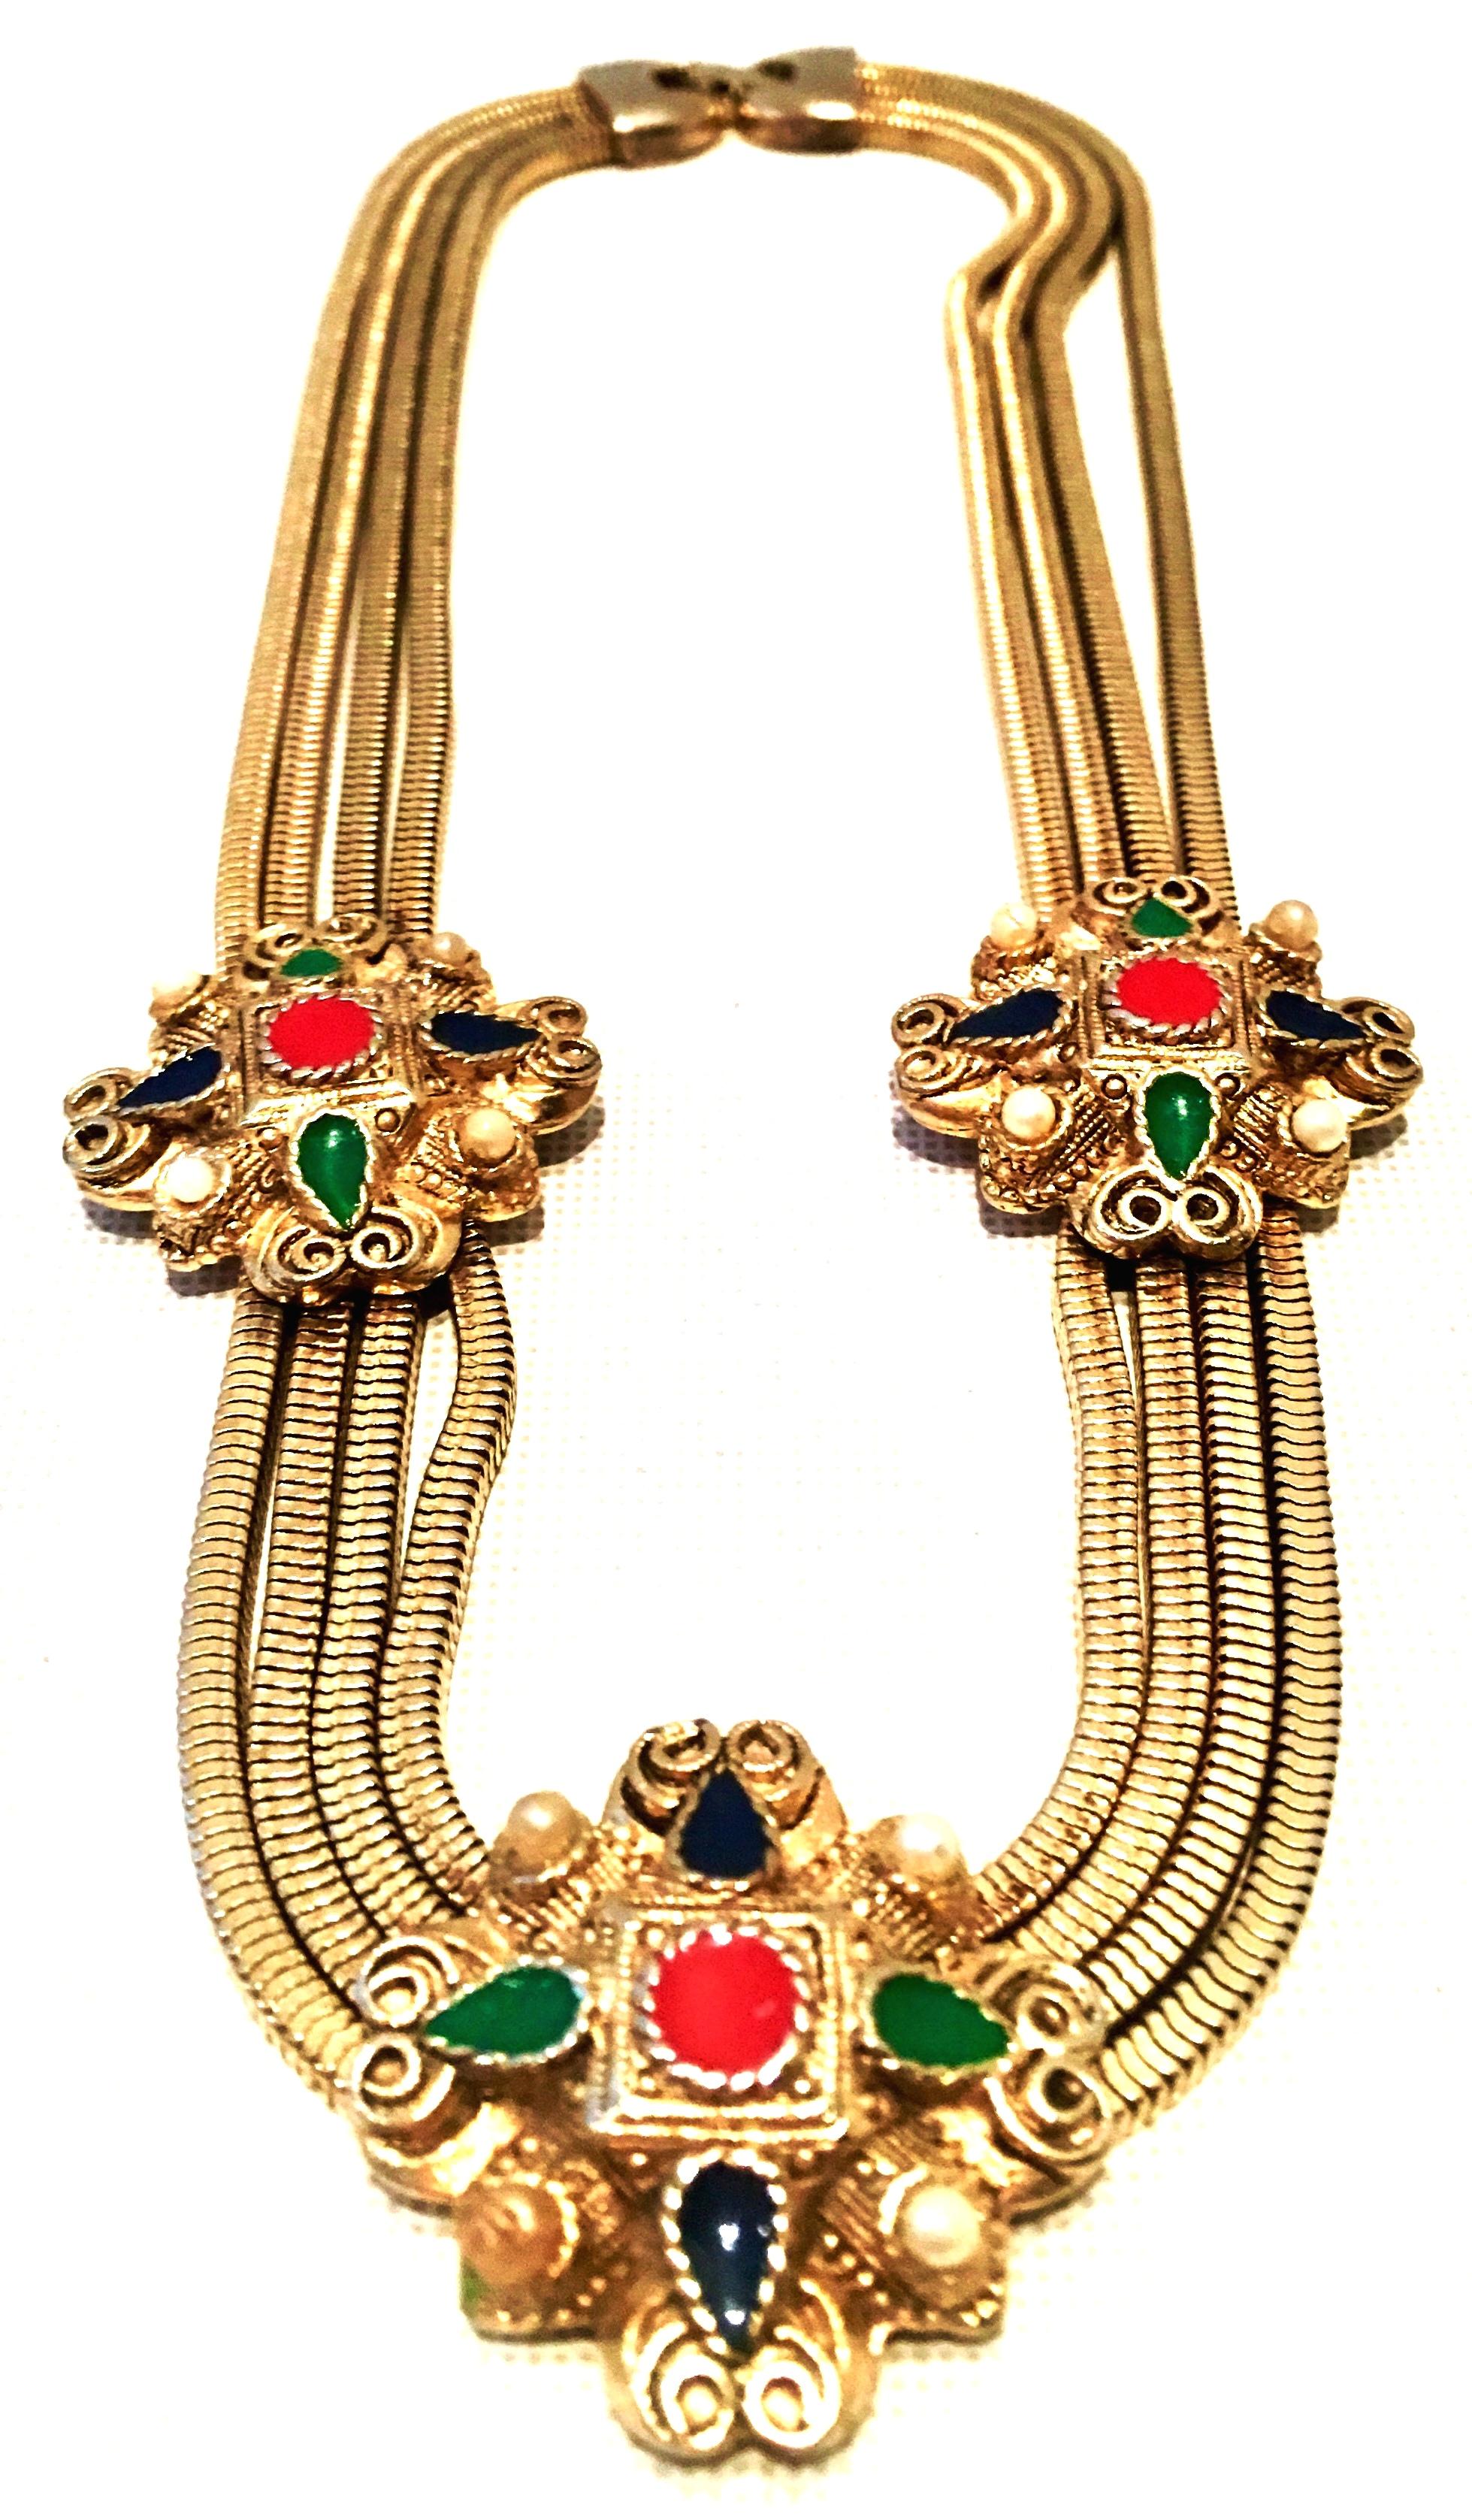 Etruscan Revival 20th Century Gold, Enamel & Faux Pearl Etruscan Style Choker Necklace